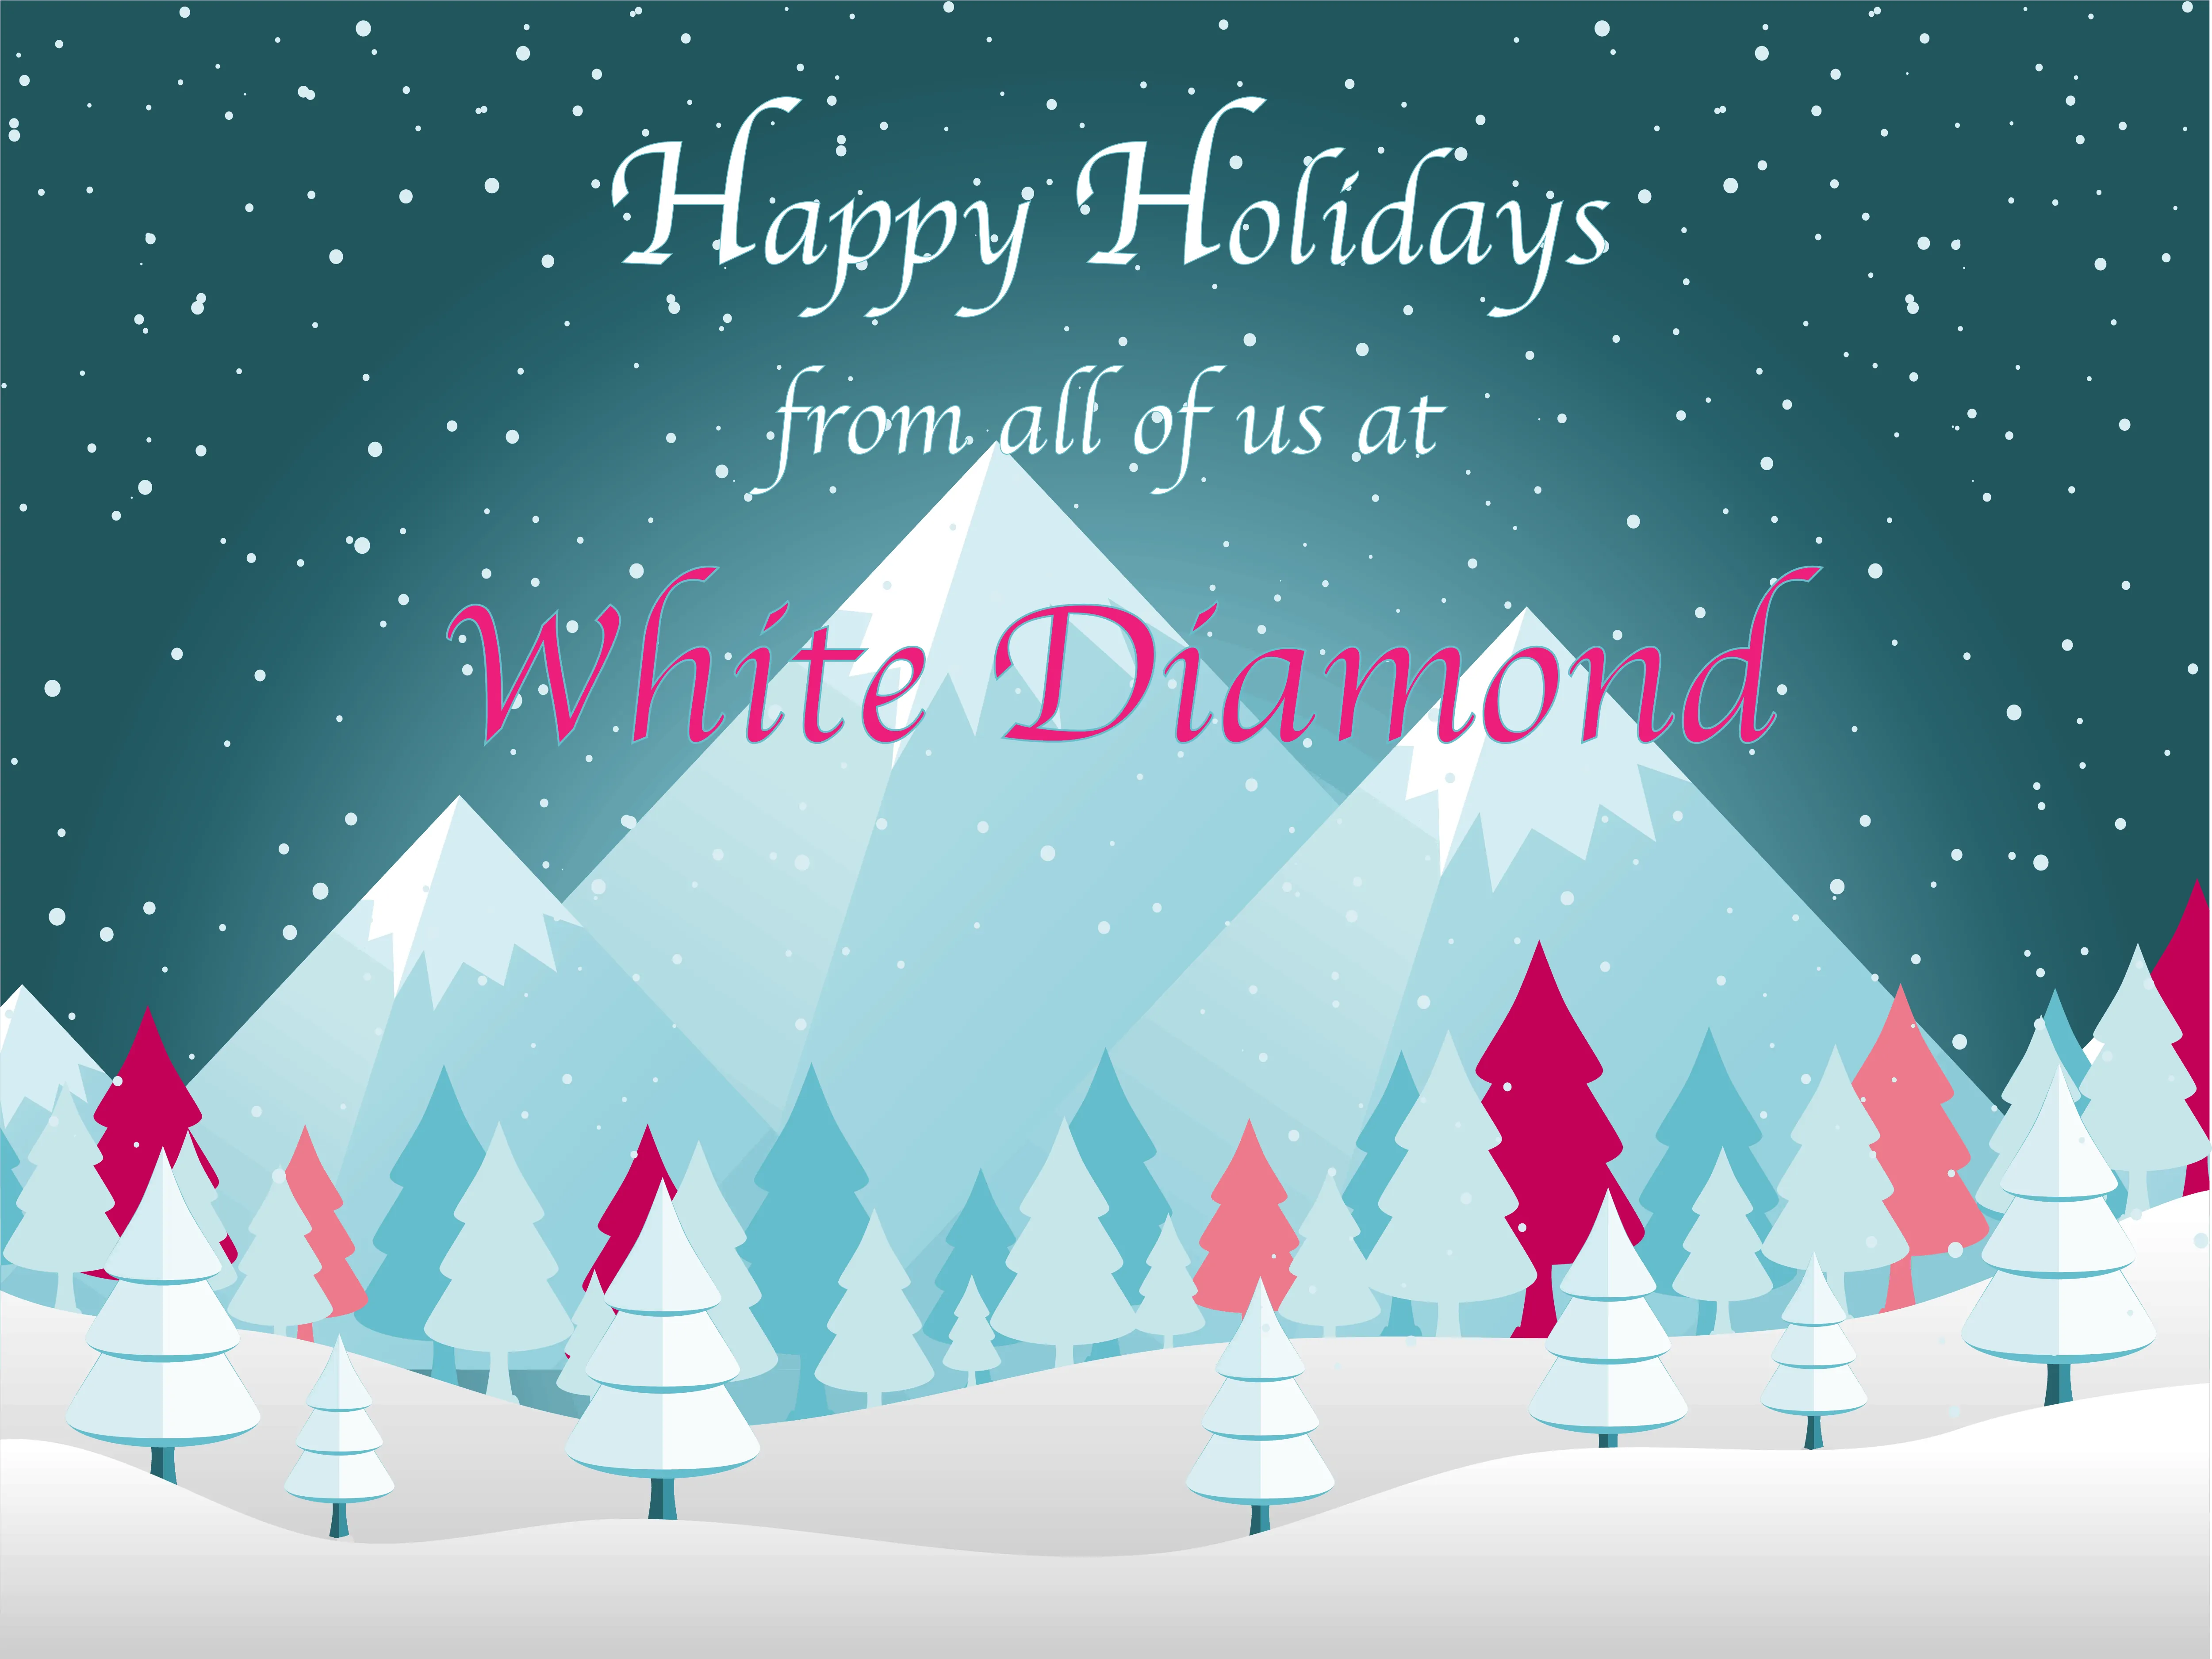 Happy Holidays from White Diamond